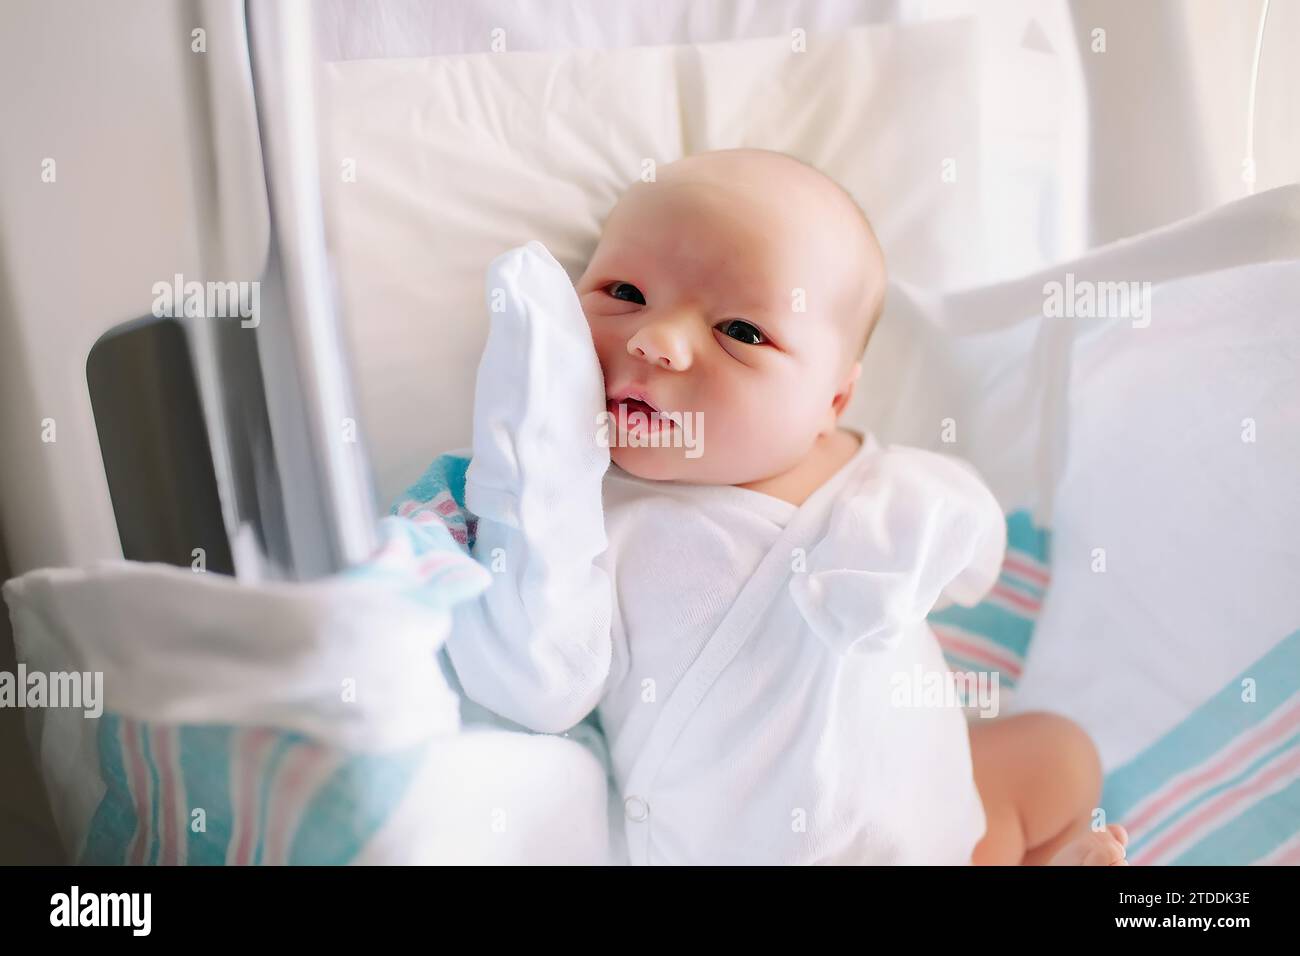 newborn baby in the hospital bassinet Stock Photo